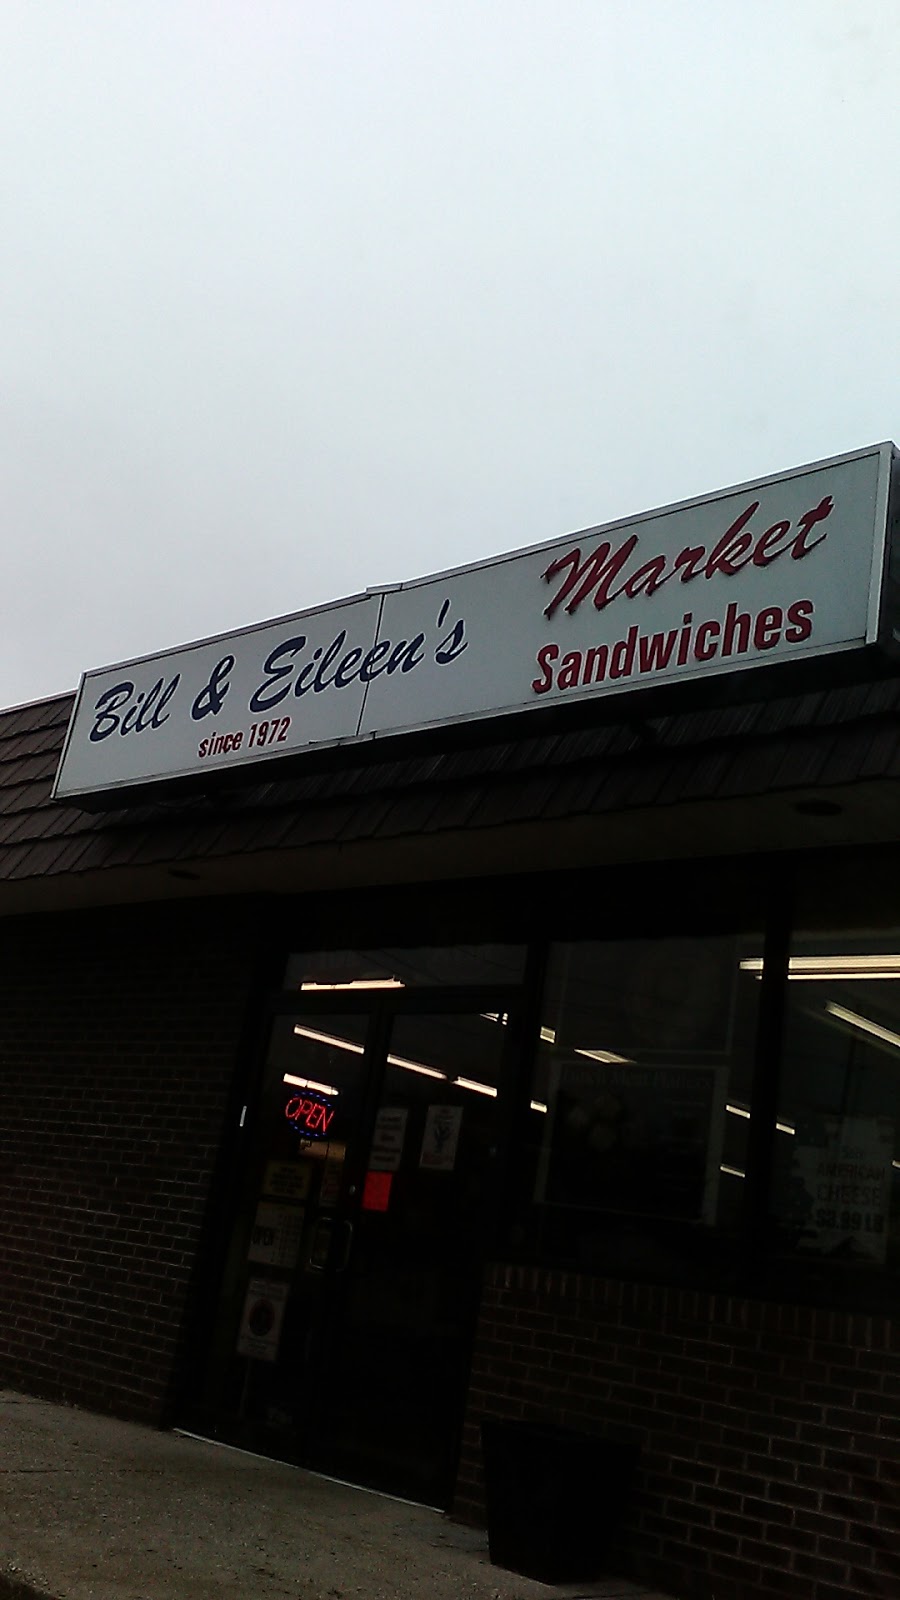 Bill & Eileens Market | 1 Red Bank Ave, National Park, NJ 08063 | Phone: (856) 853-1507